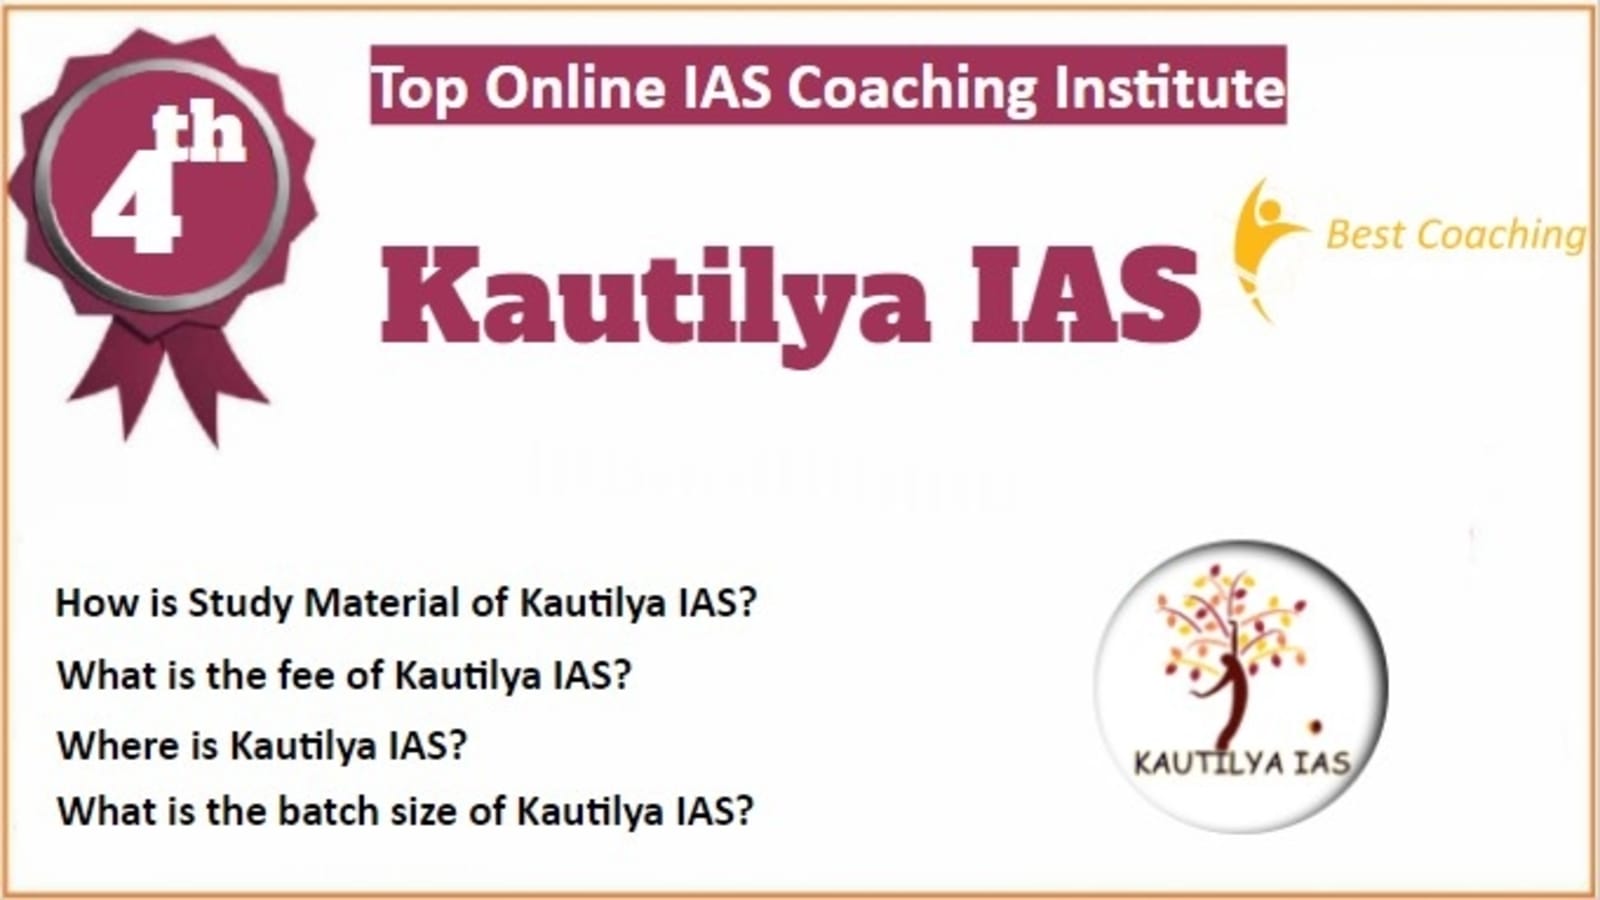 Rank 4 Best Online IAS Coaching